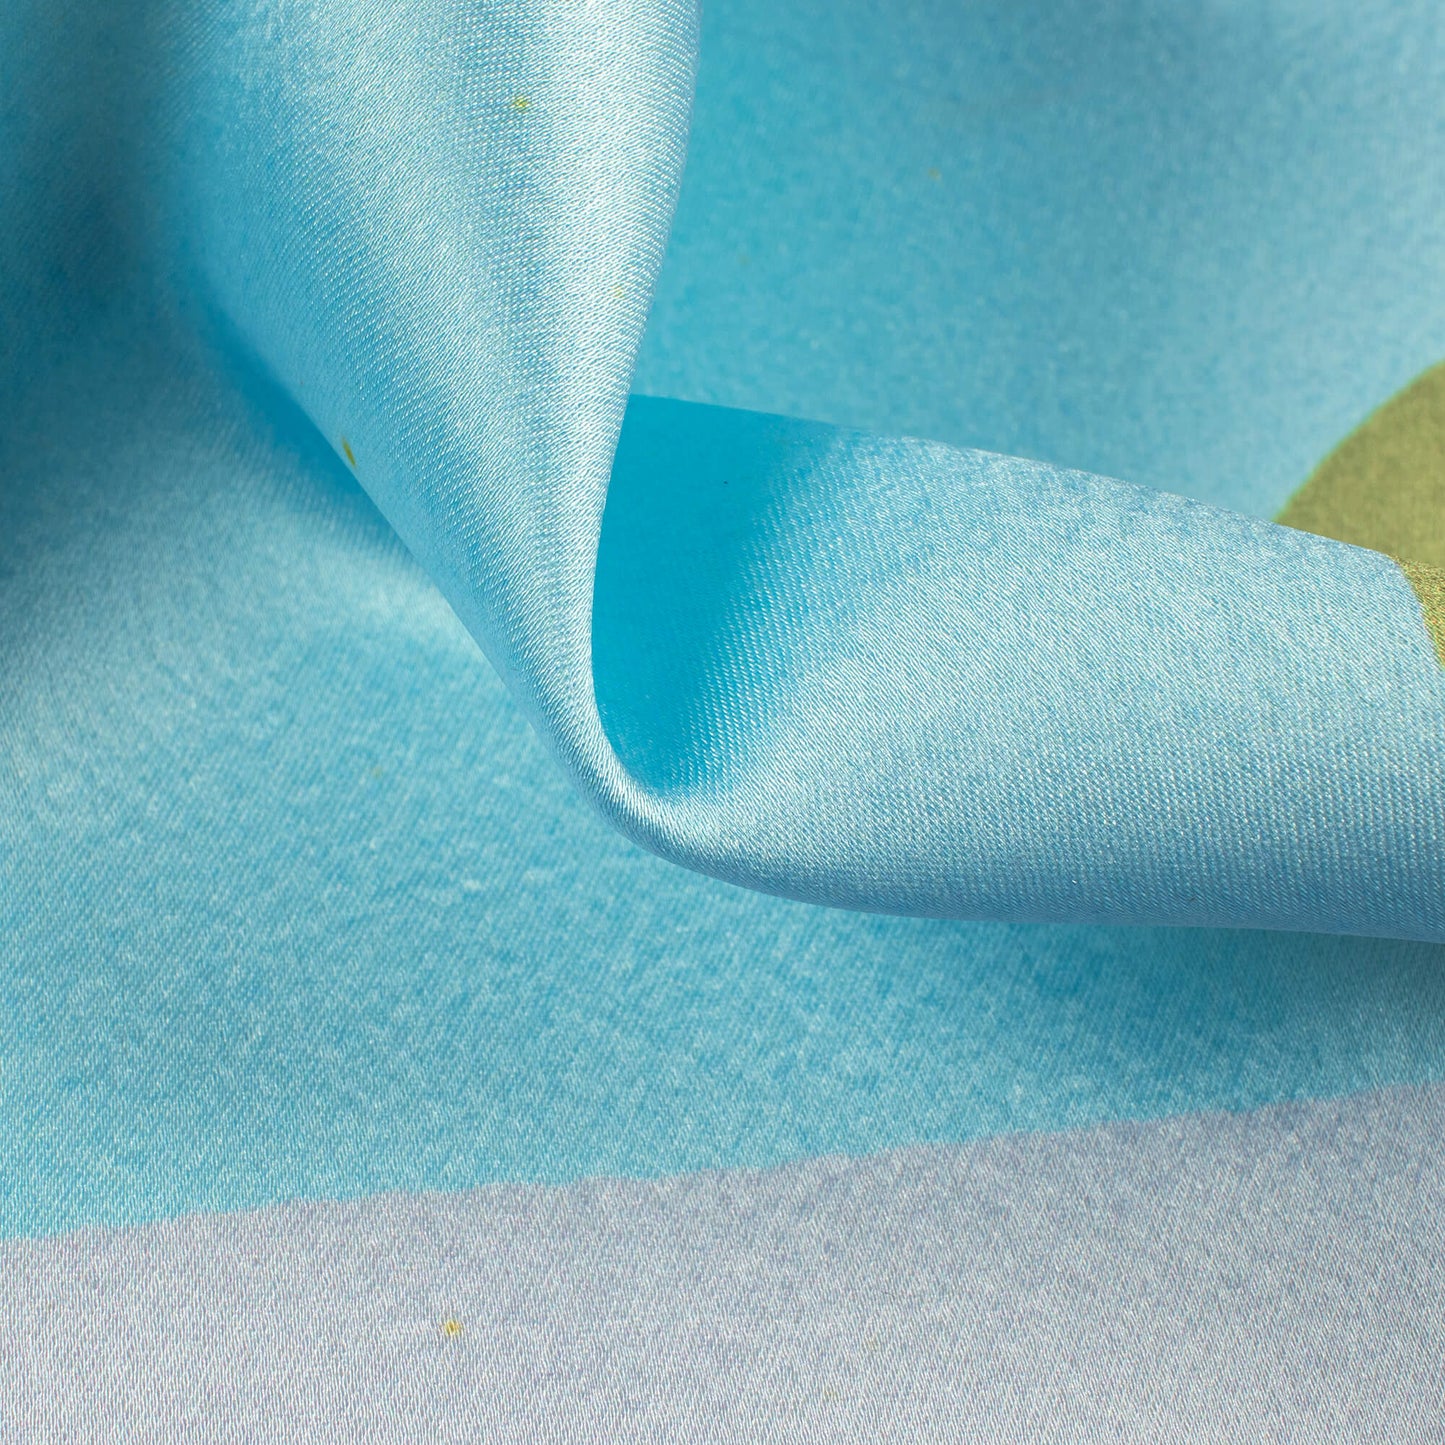 Bumblebee Yellow And Blue Abstract Digital Print Japan Satin Fabric